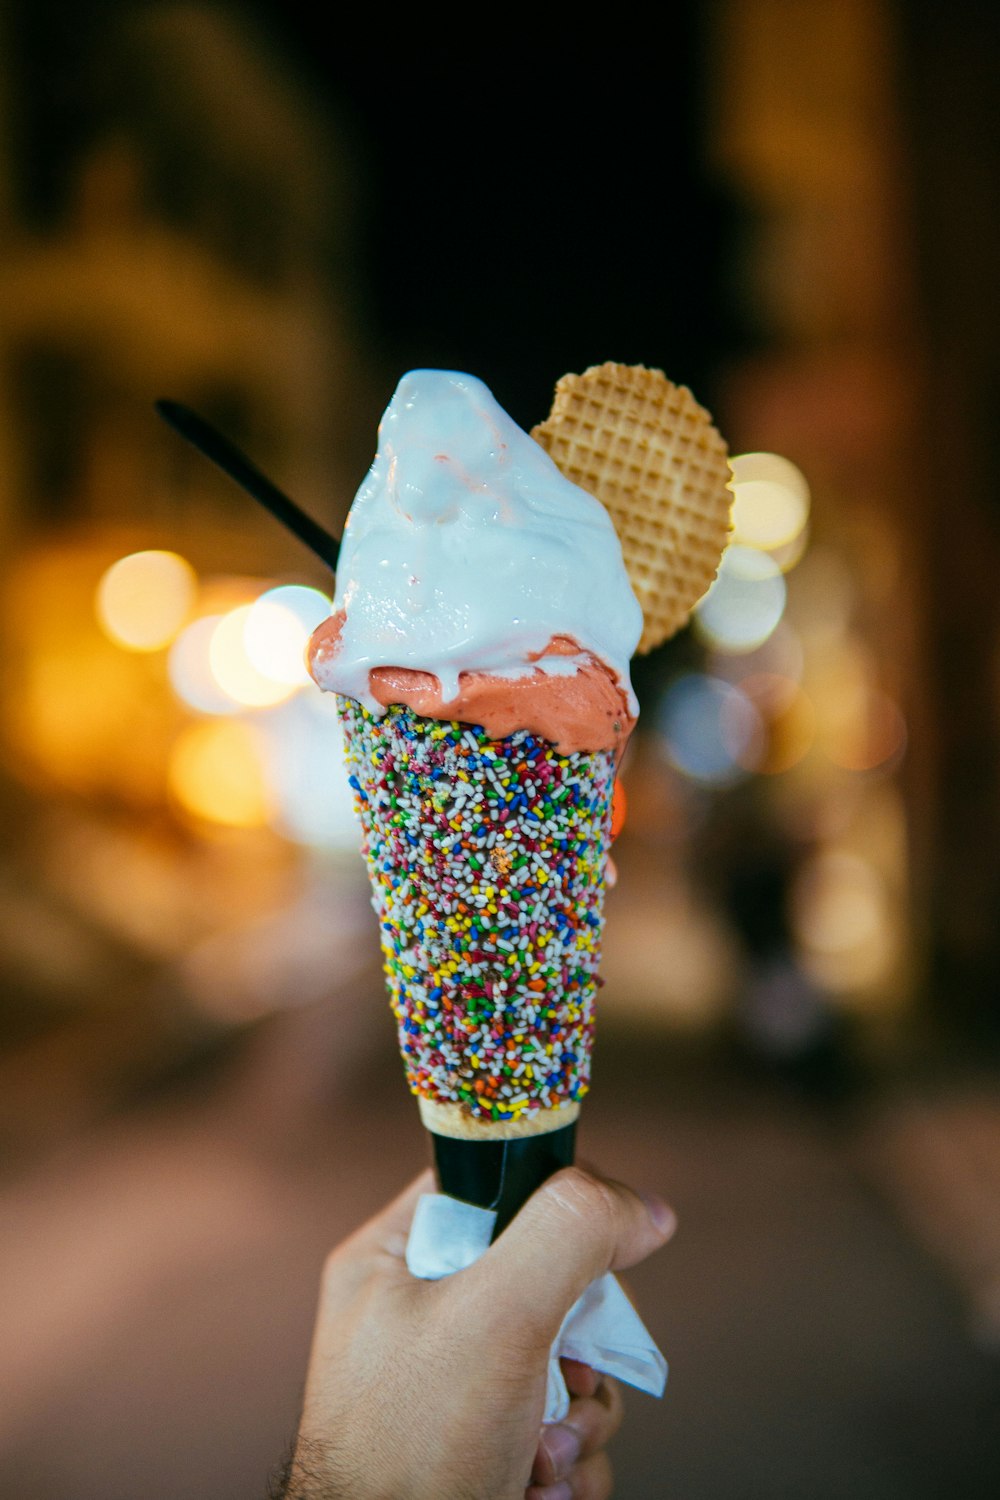 person holding multicolored sprinkled ice cream cone with vanilla flavored ice cream